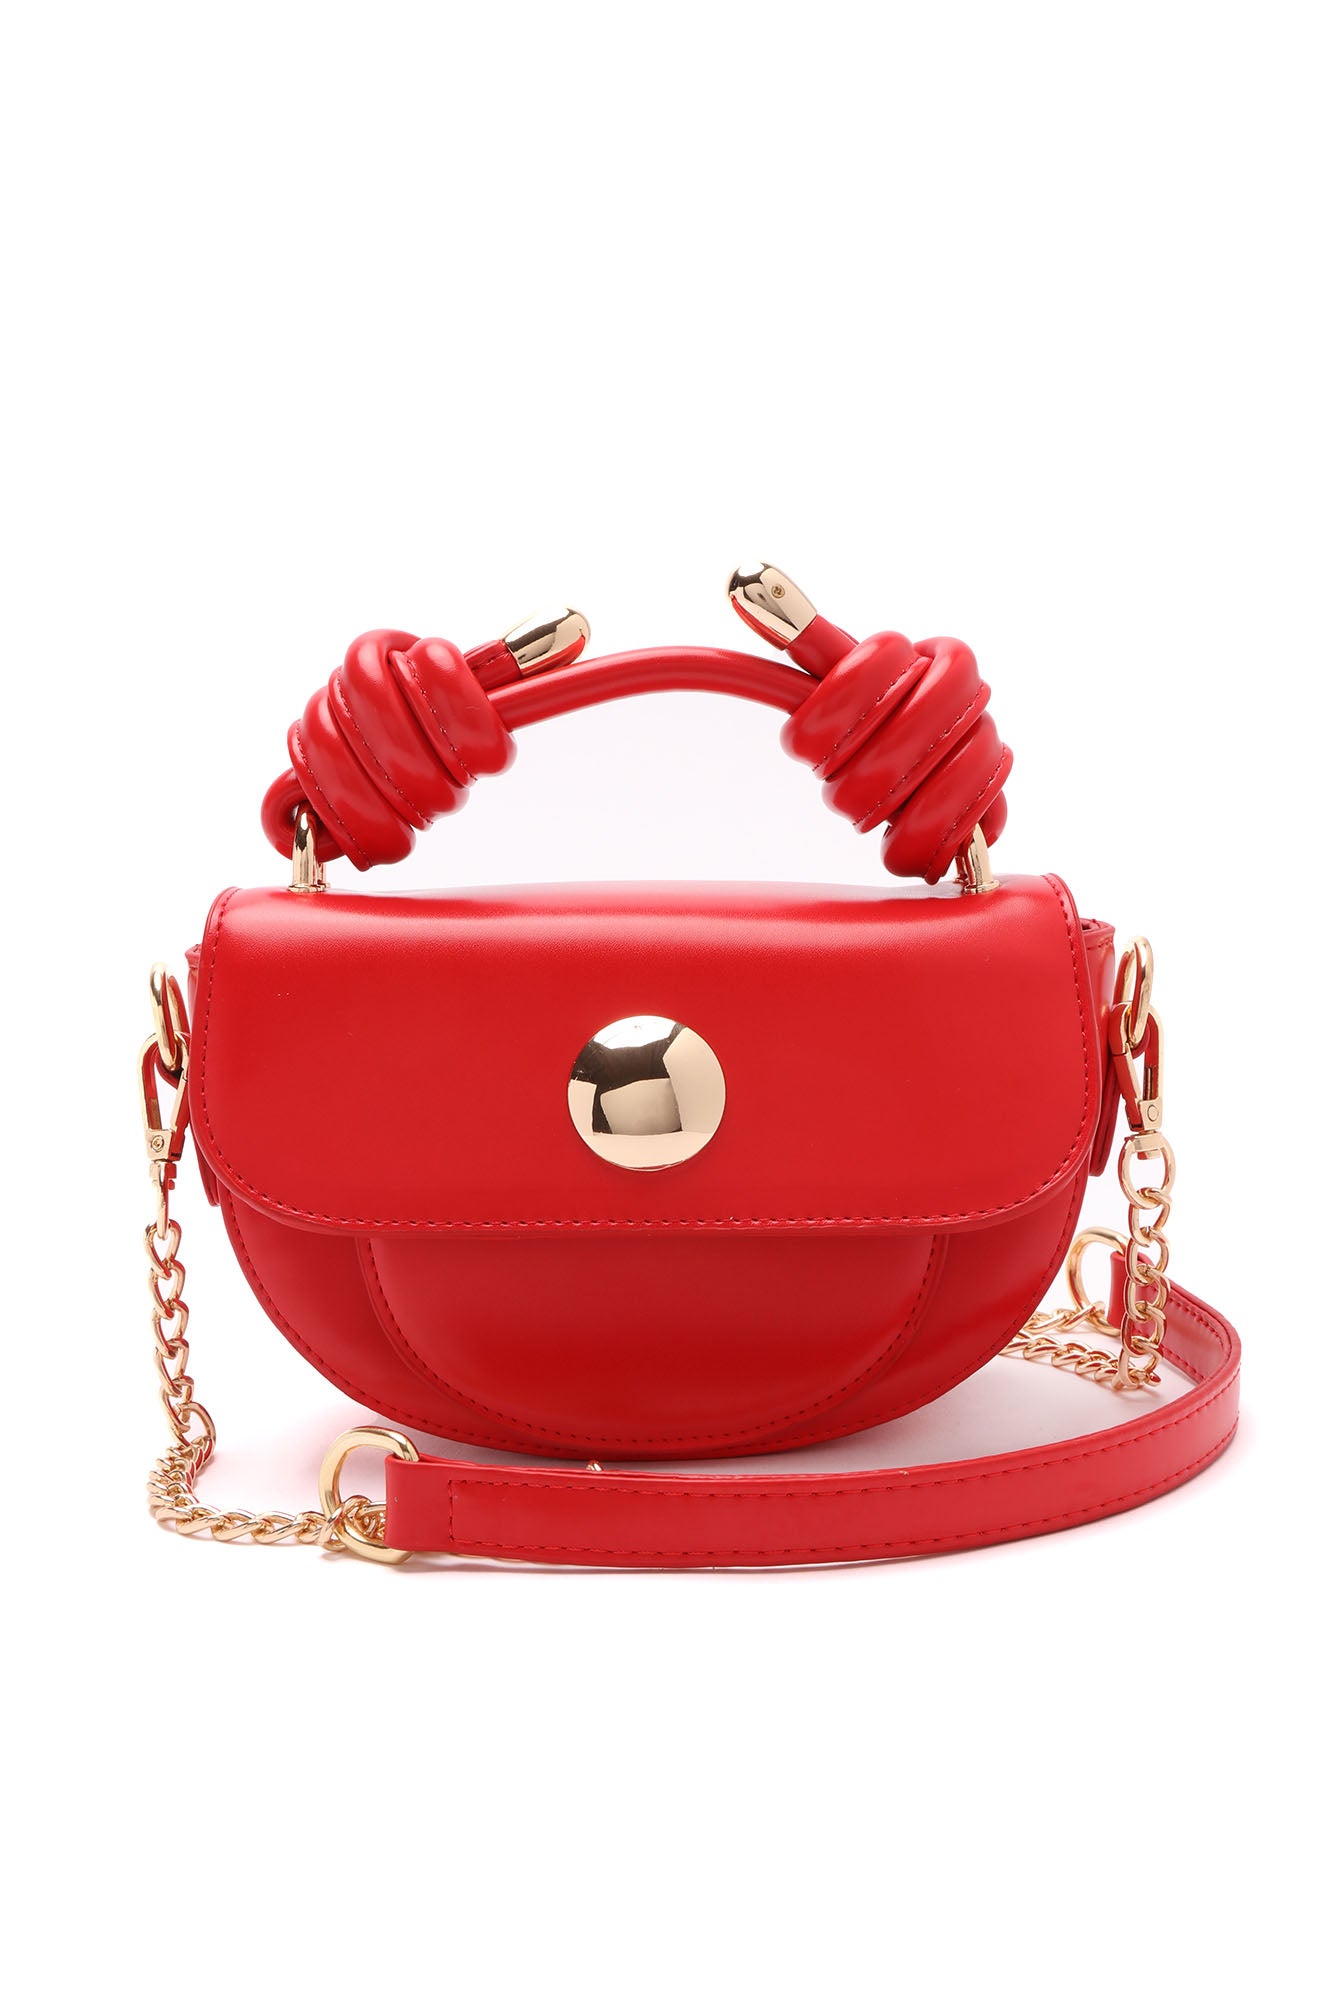 So High Class Handbag - Red, Fashion Nova, Handbags